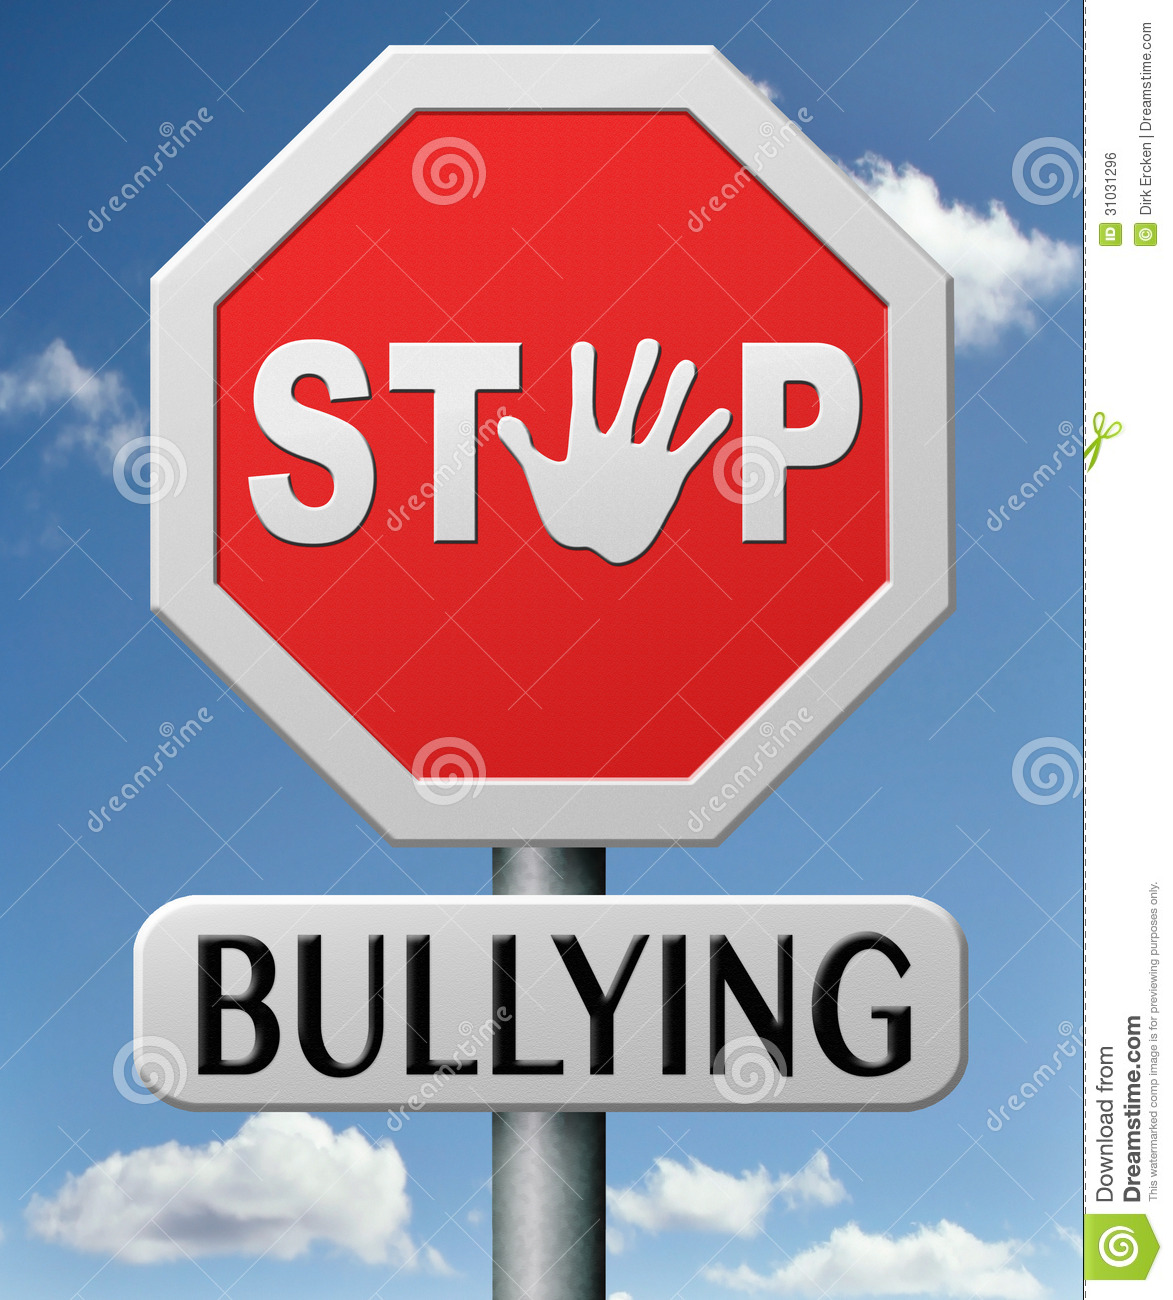 Free School Clipart Bullying Stop Bullying No School Bully Royalty